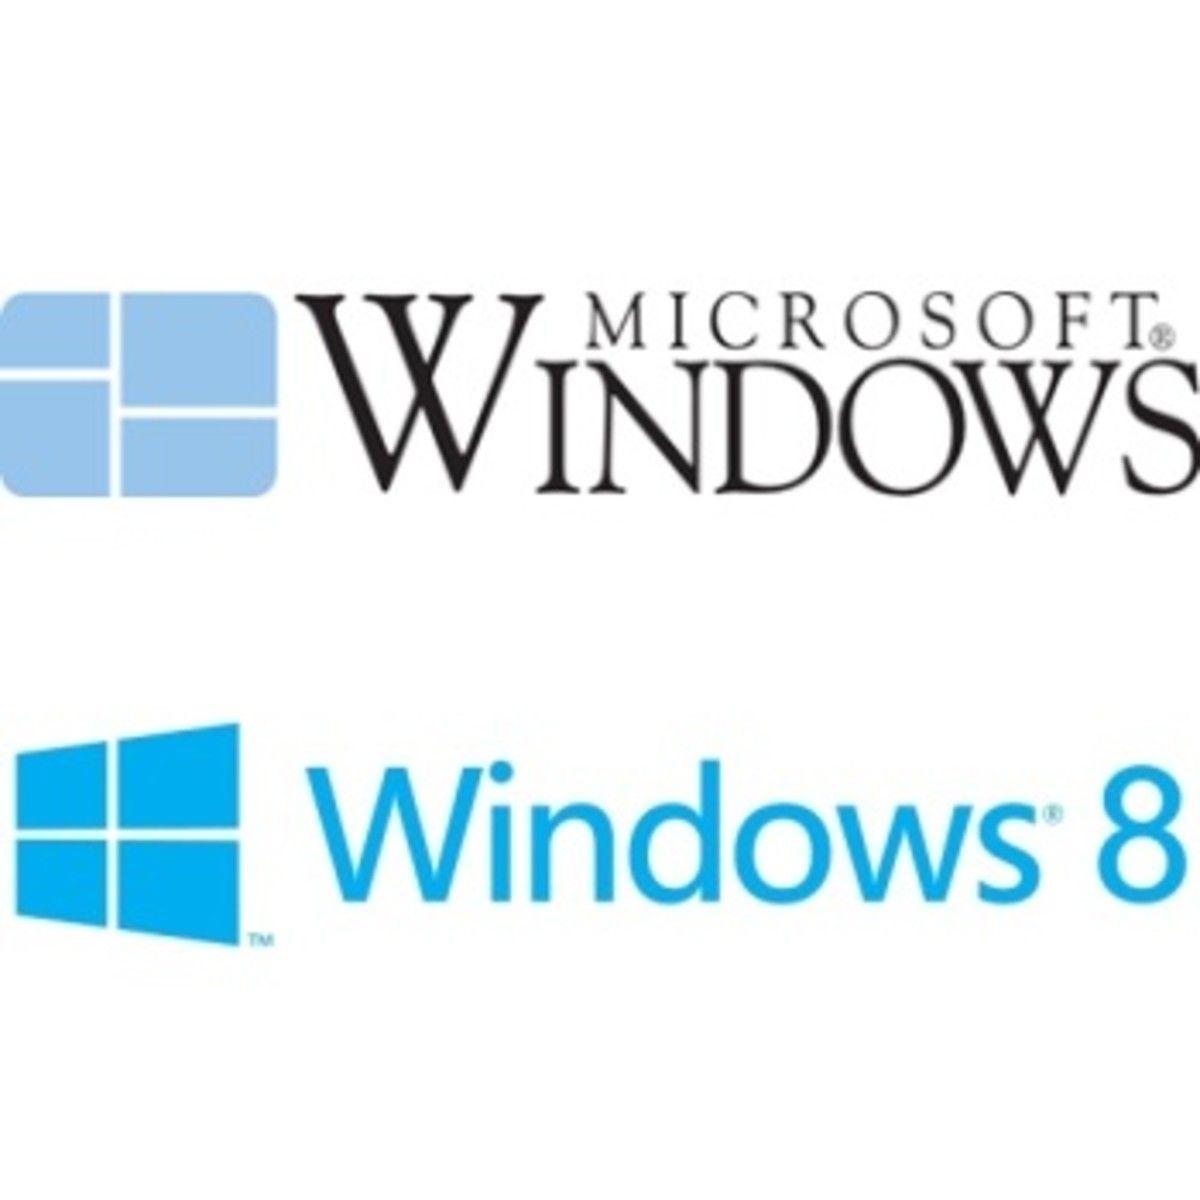 Microsoft 8 Logo - Microsoft unveils Windows 8 logo - PC Retail